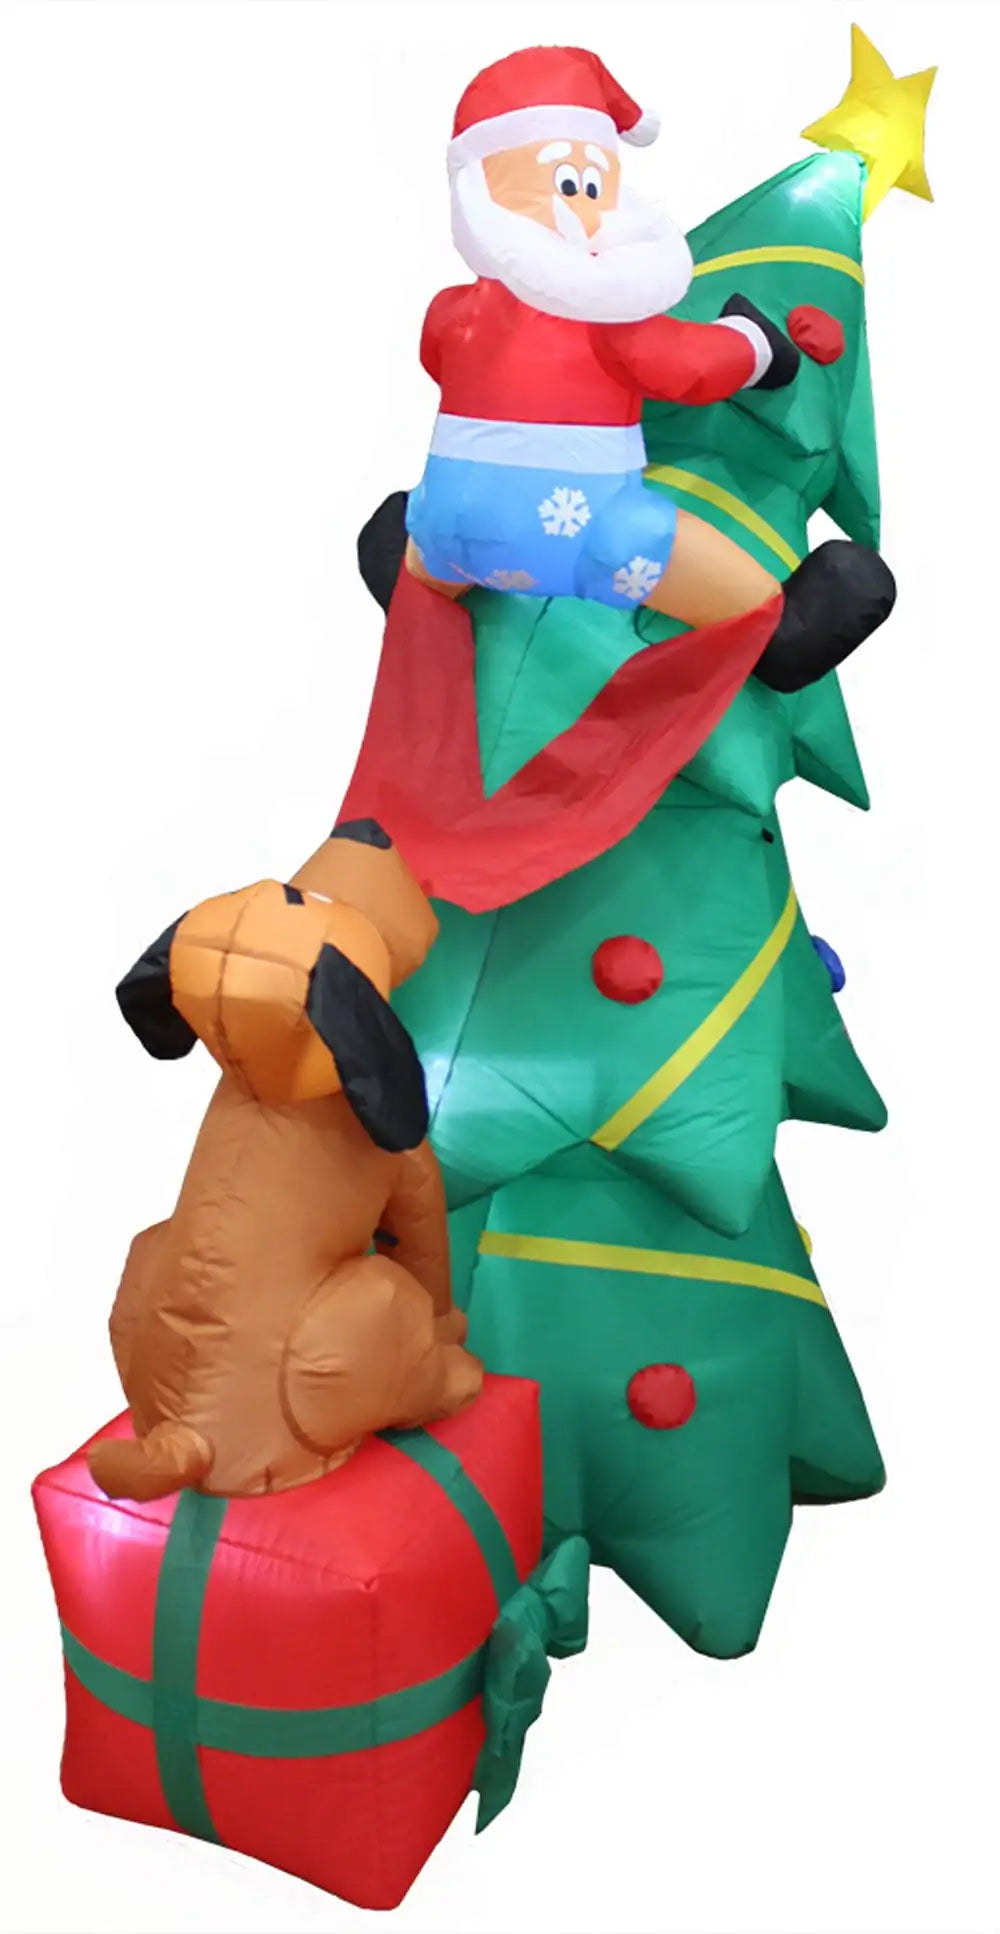 Yard Inflatable Christmas Tree with Santa and Dog and Snowman